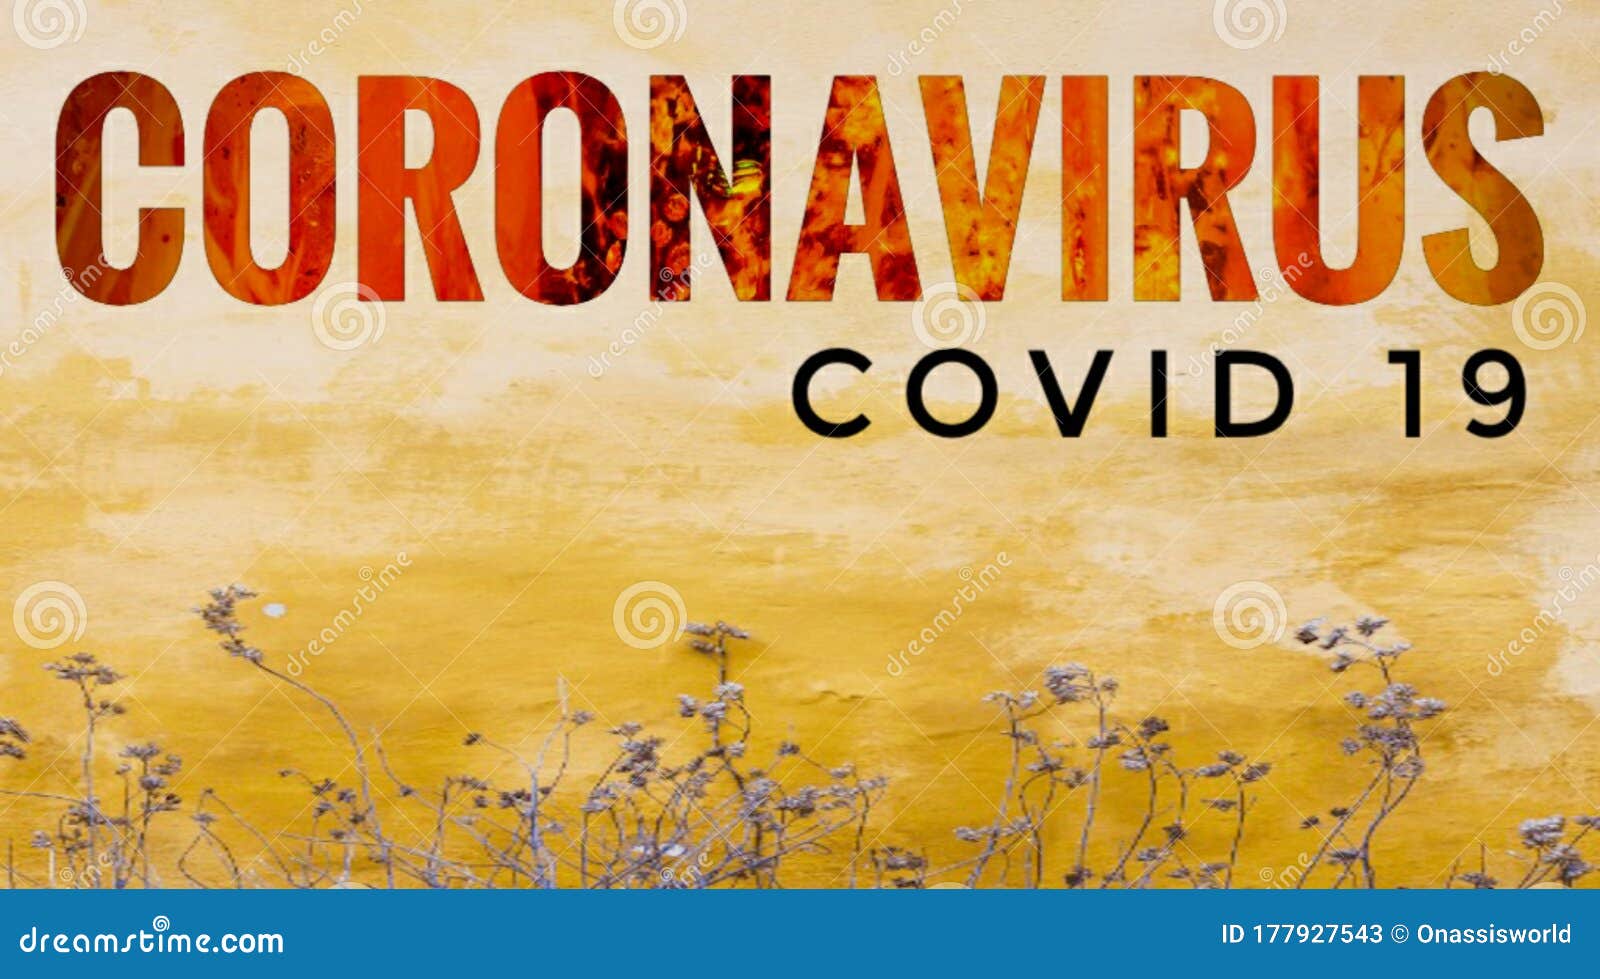 corona virus covid-19 outbreak alert header